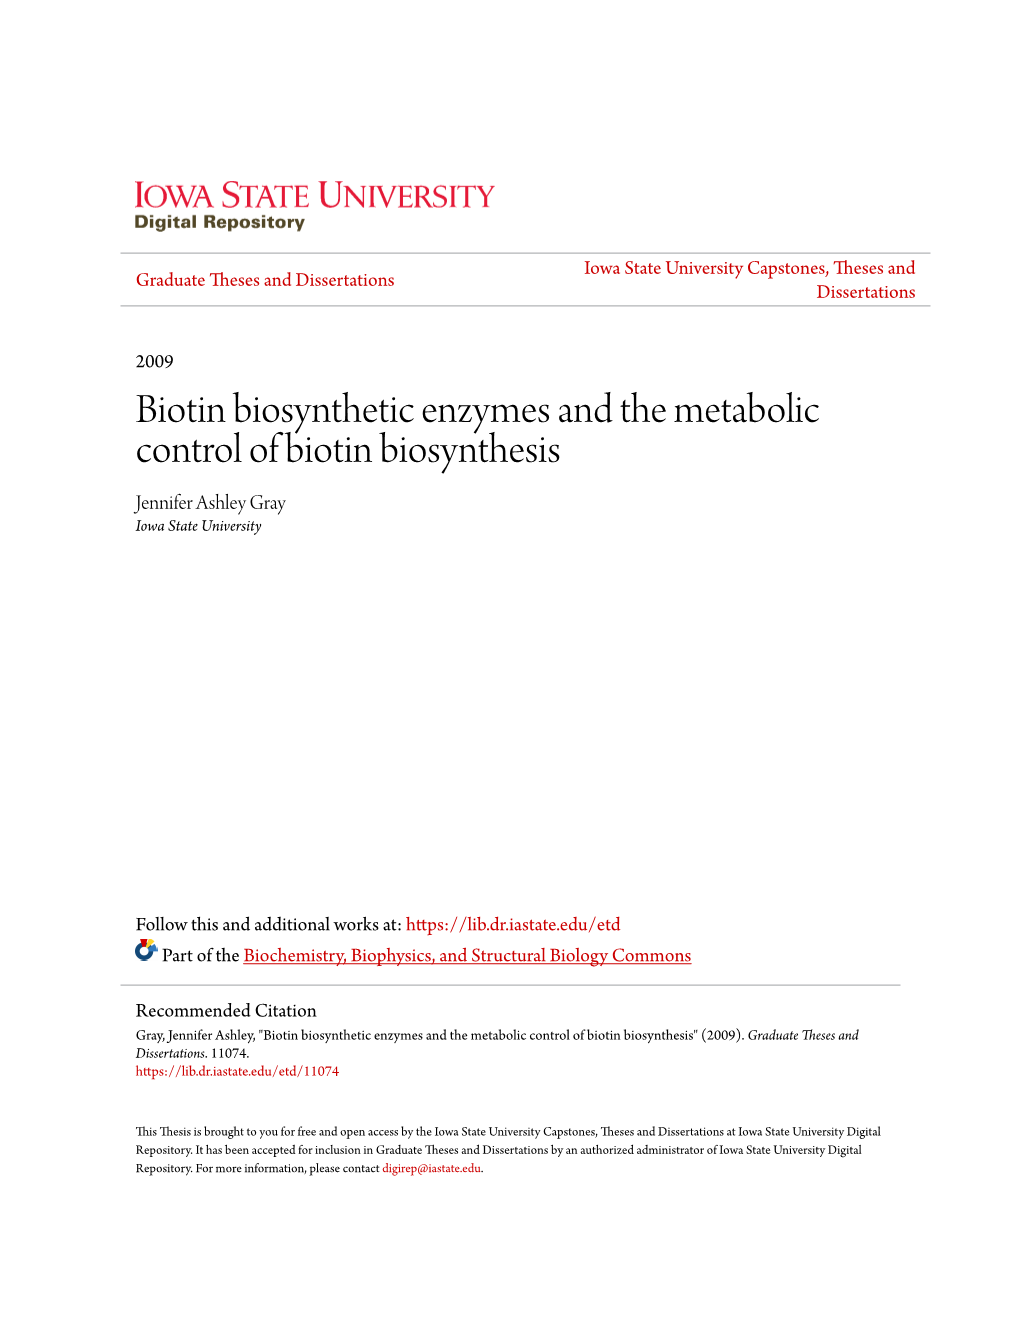 Biotin Biosynthetic Enzymes and the Metabolic Control of Biotin Biosynthesis Jennifer Ashley Gray Iowa State University